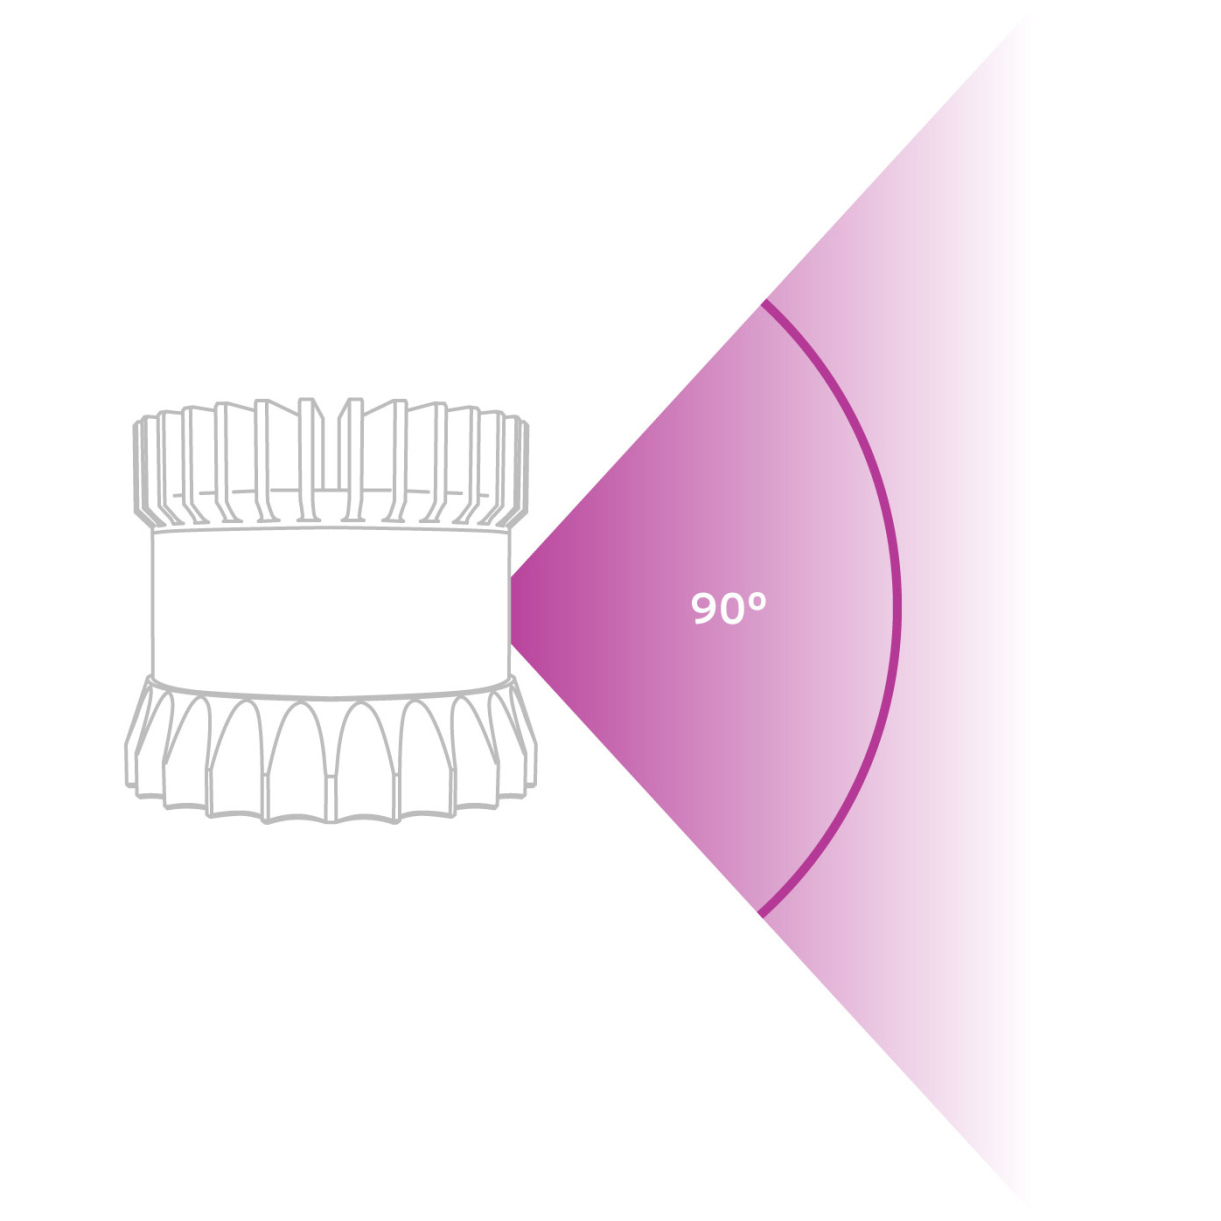 Graphic of os0 uniform beam spacing